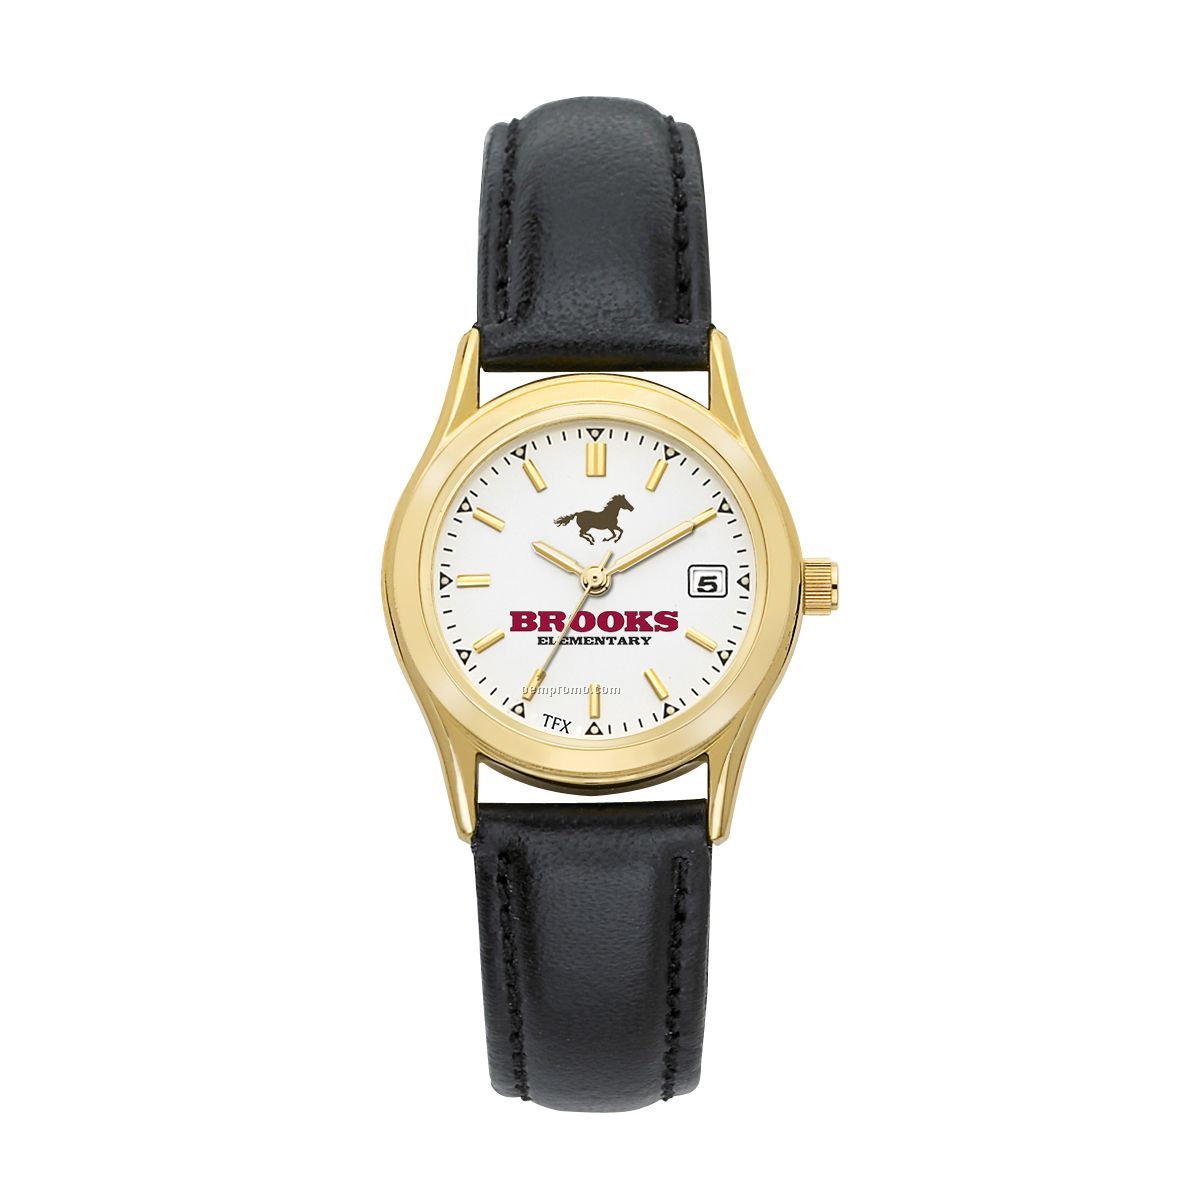 Tfx Distributed By Bulova- Ladies' Analog Wrist Watch